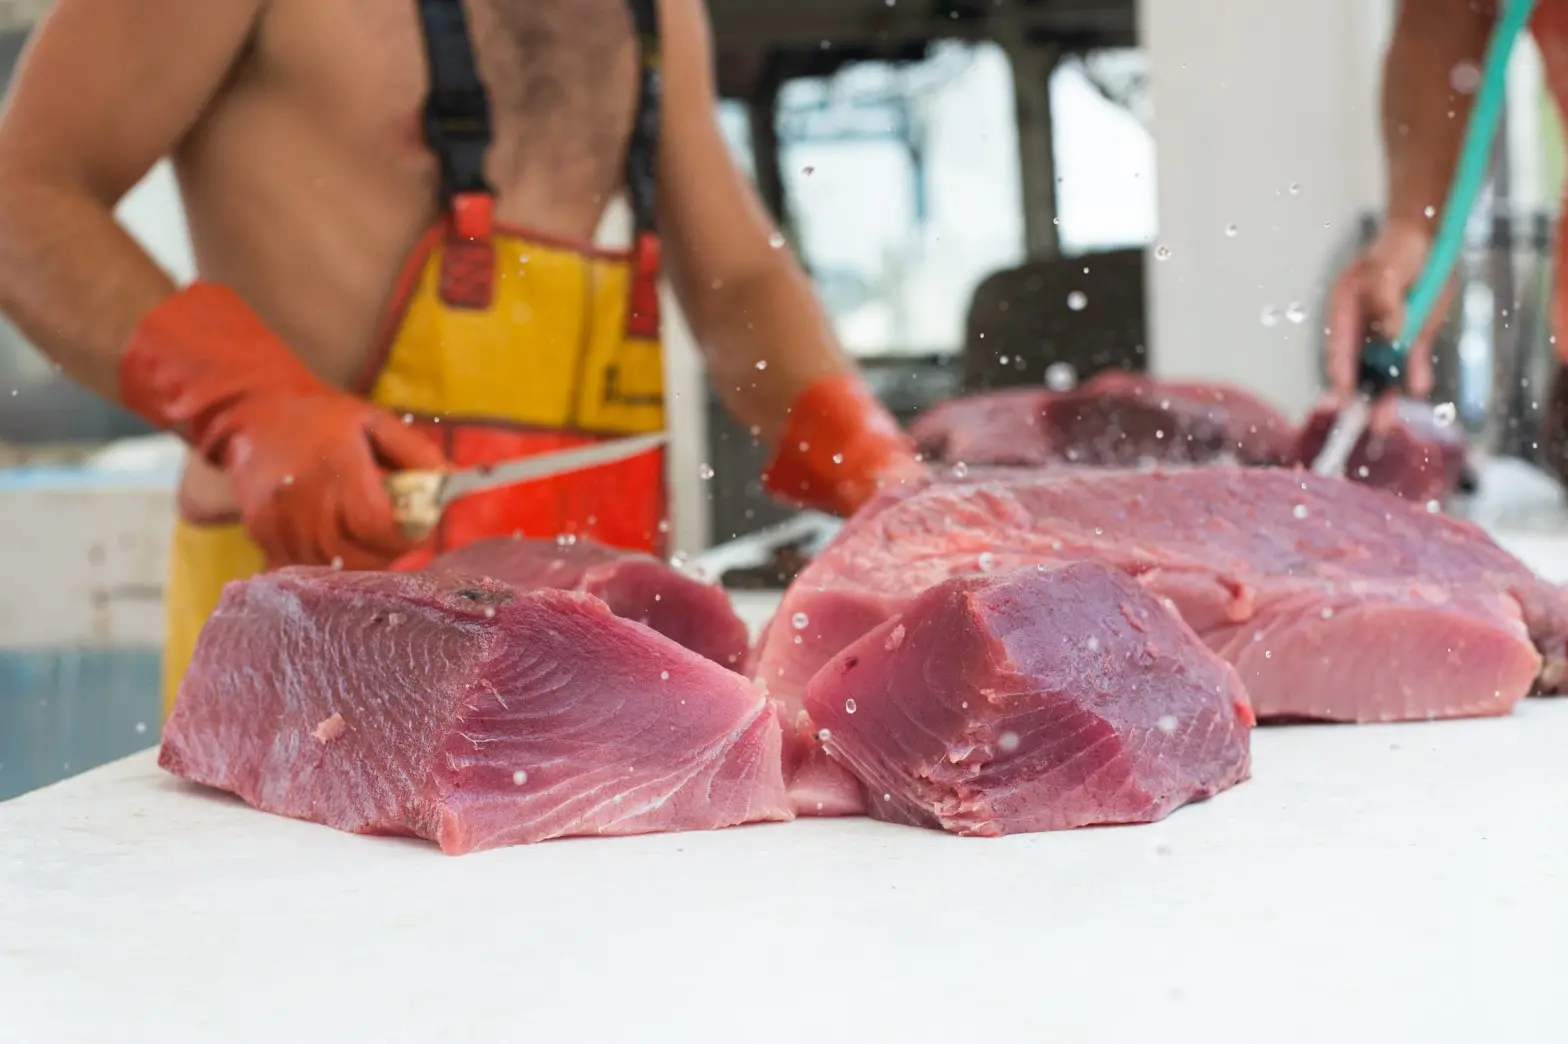 Guy cutting yellowfish tuna